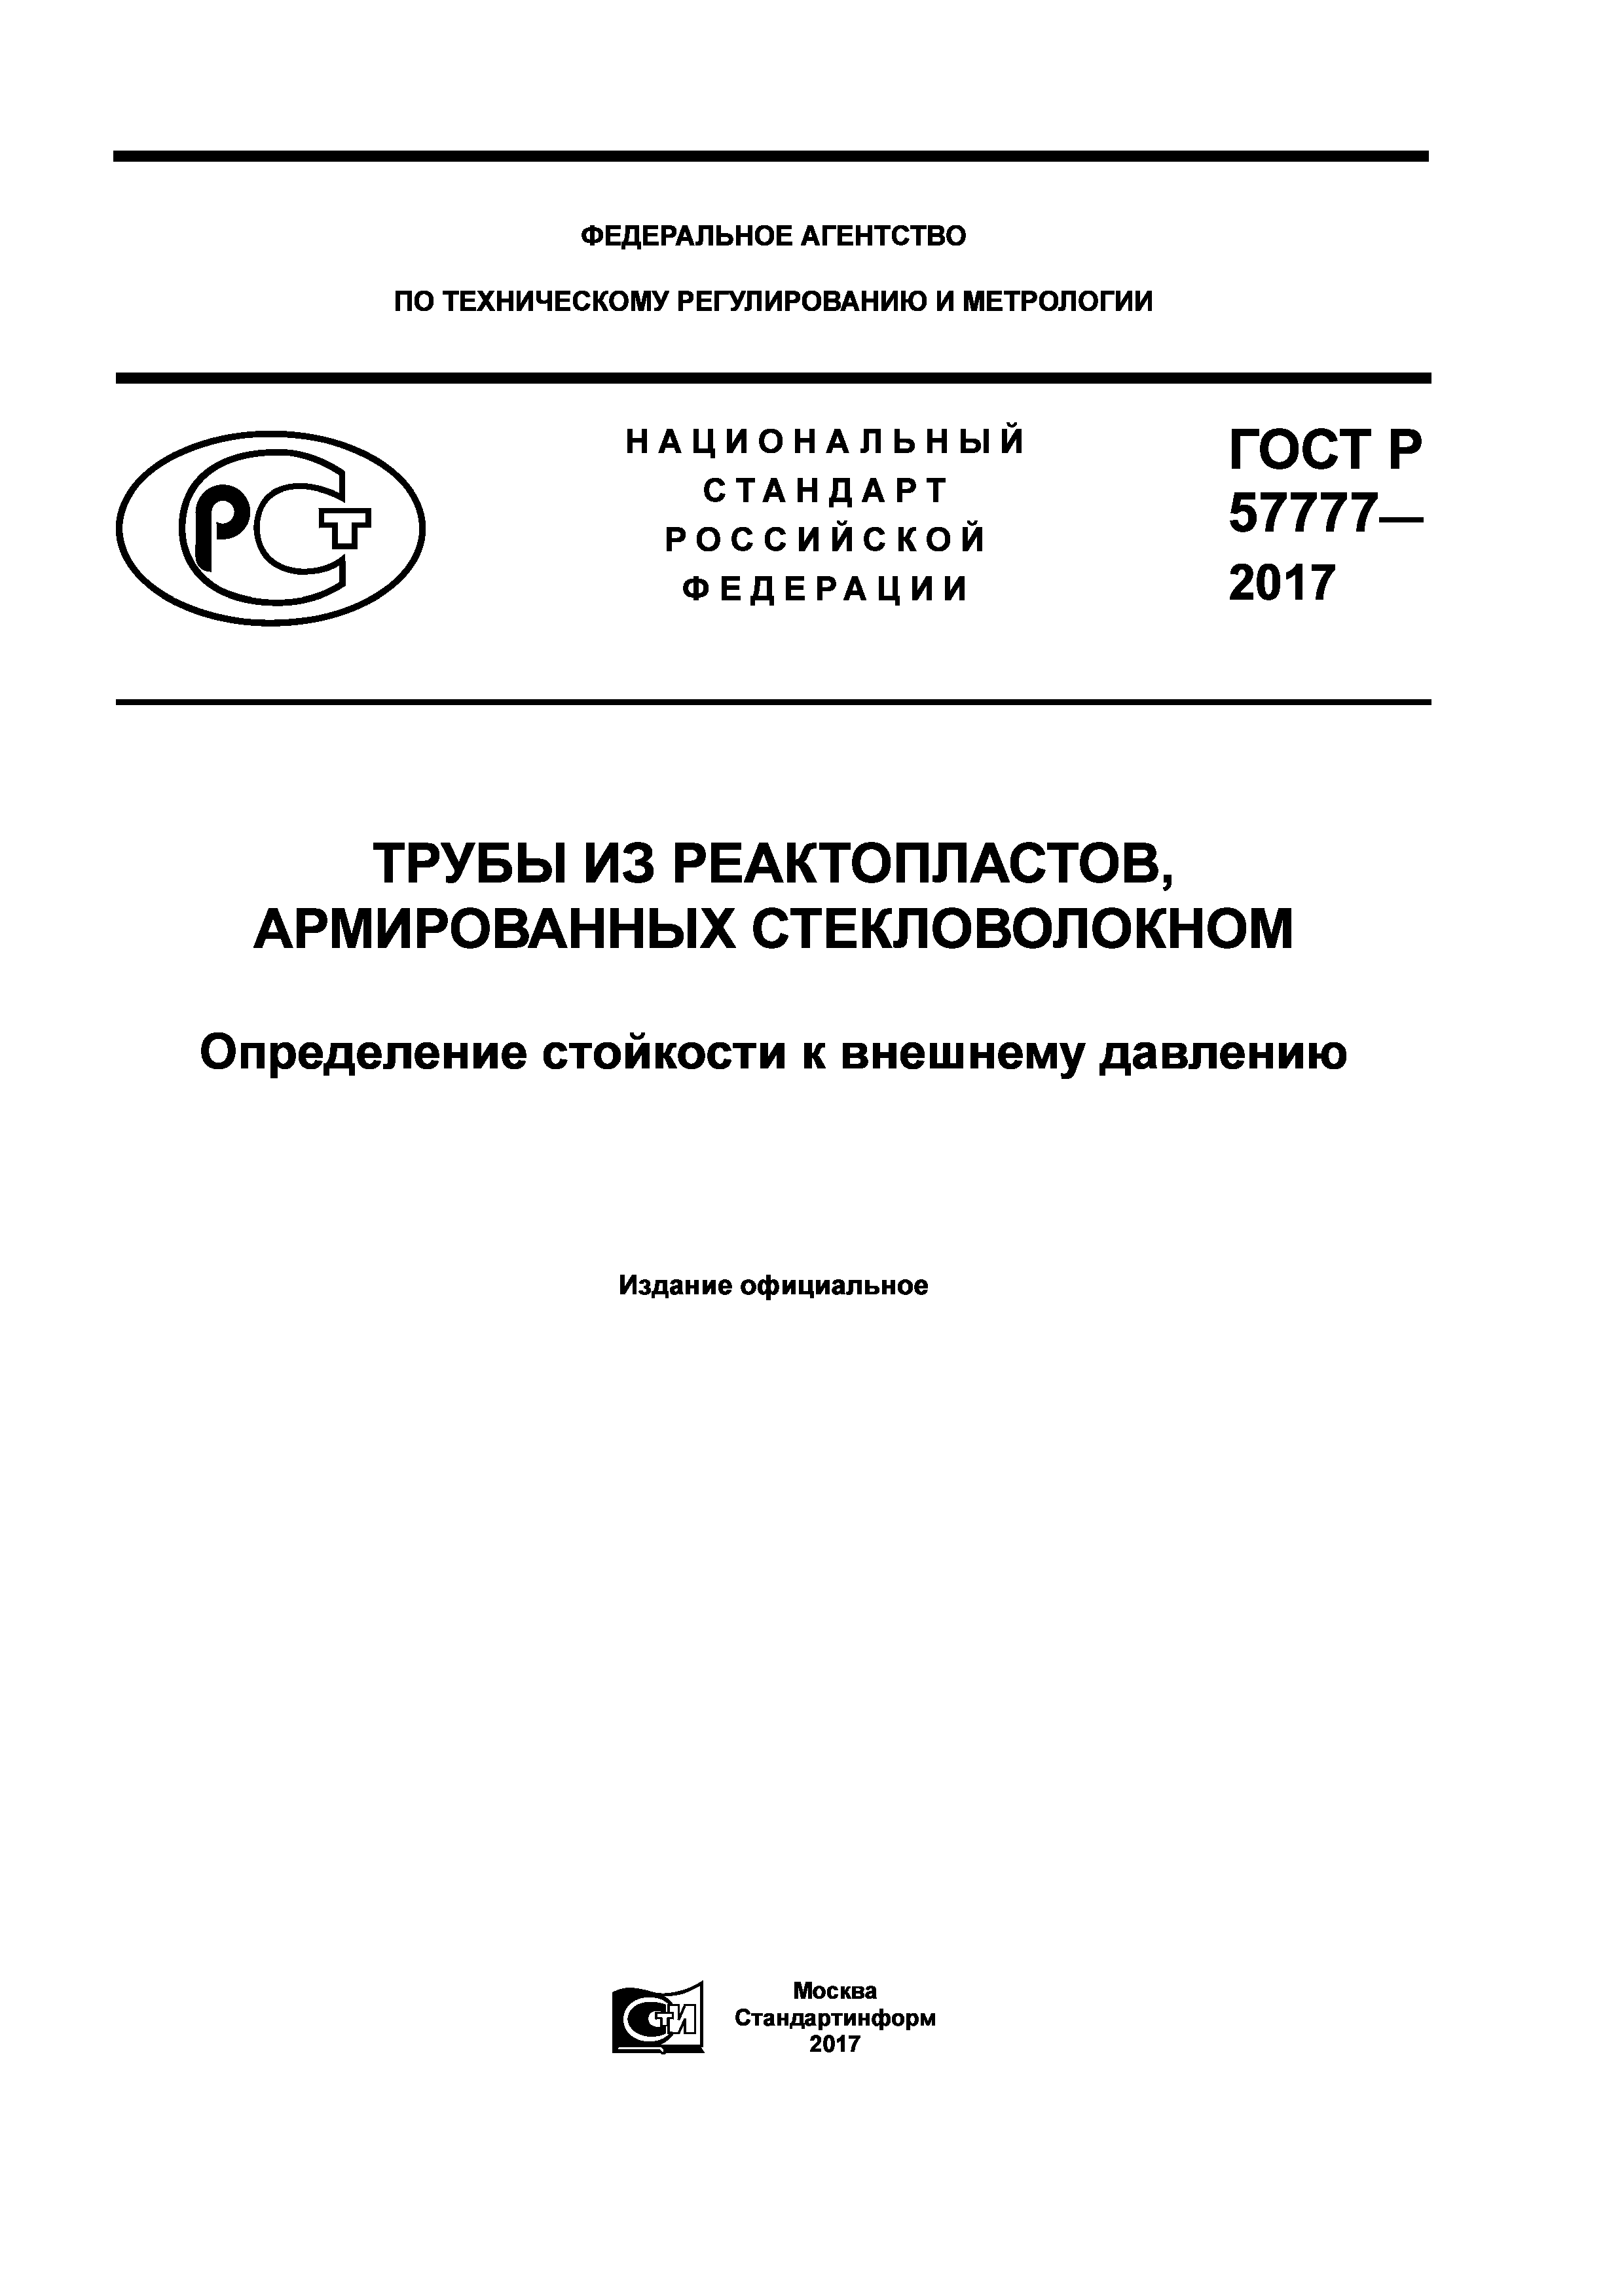 ГОСТ Р 57777-2017